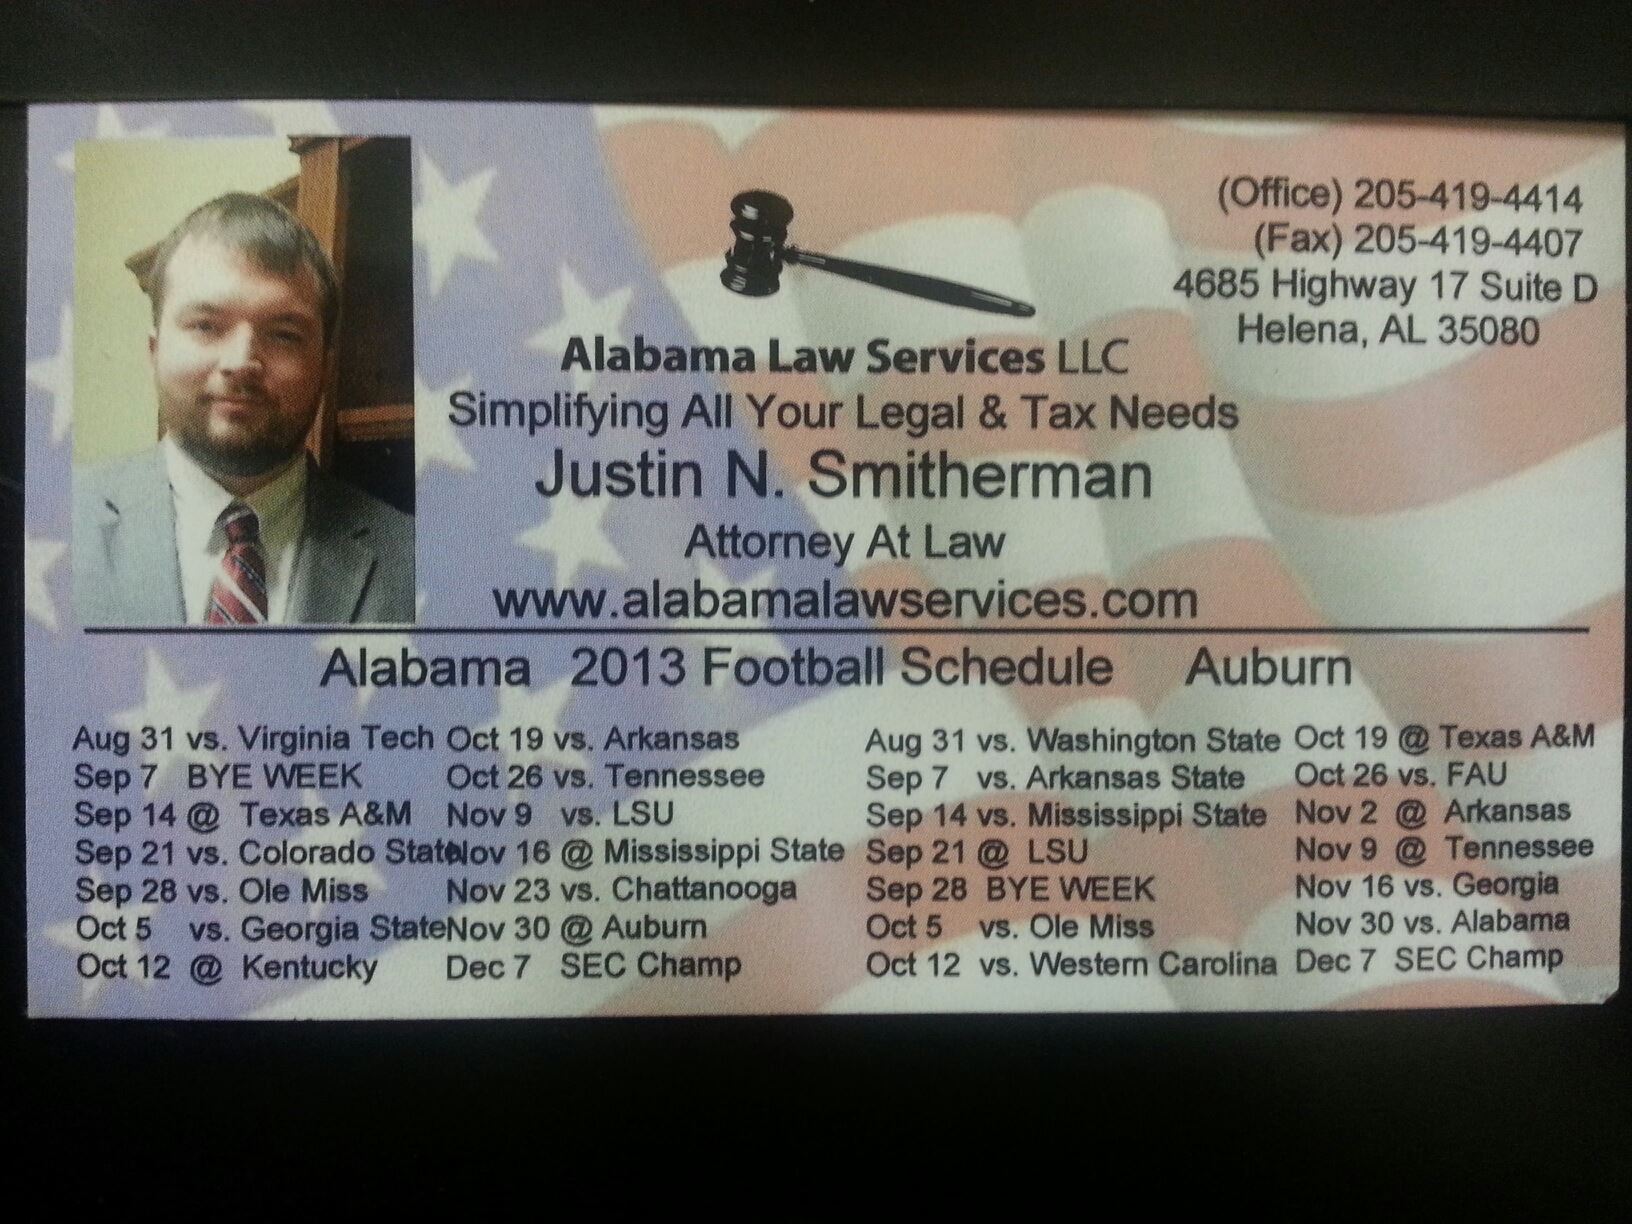 Alabama Law Services, LLC